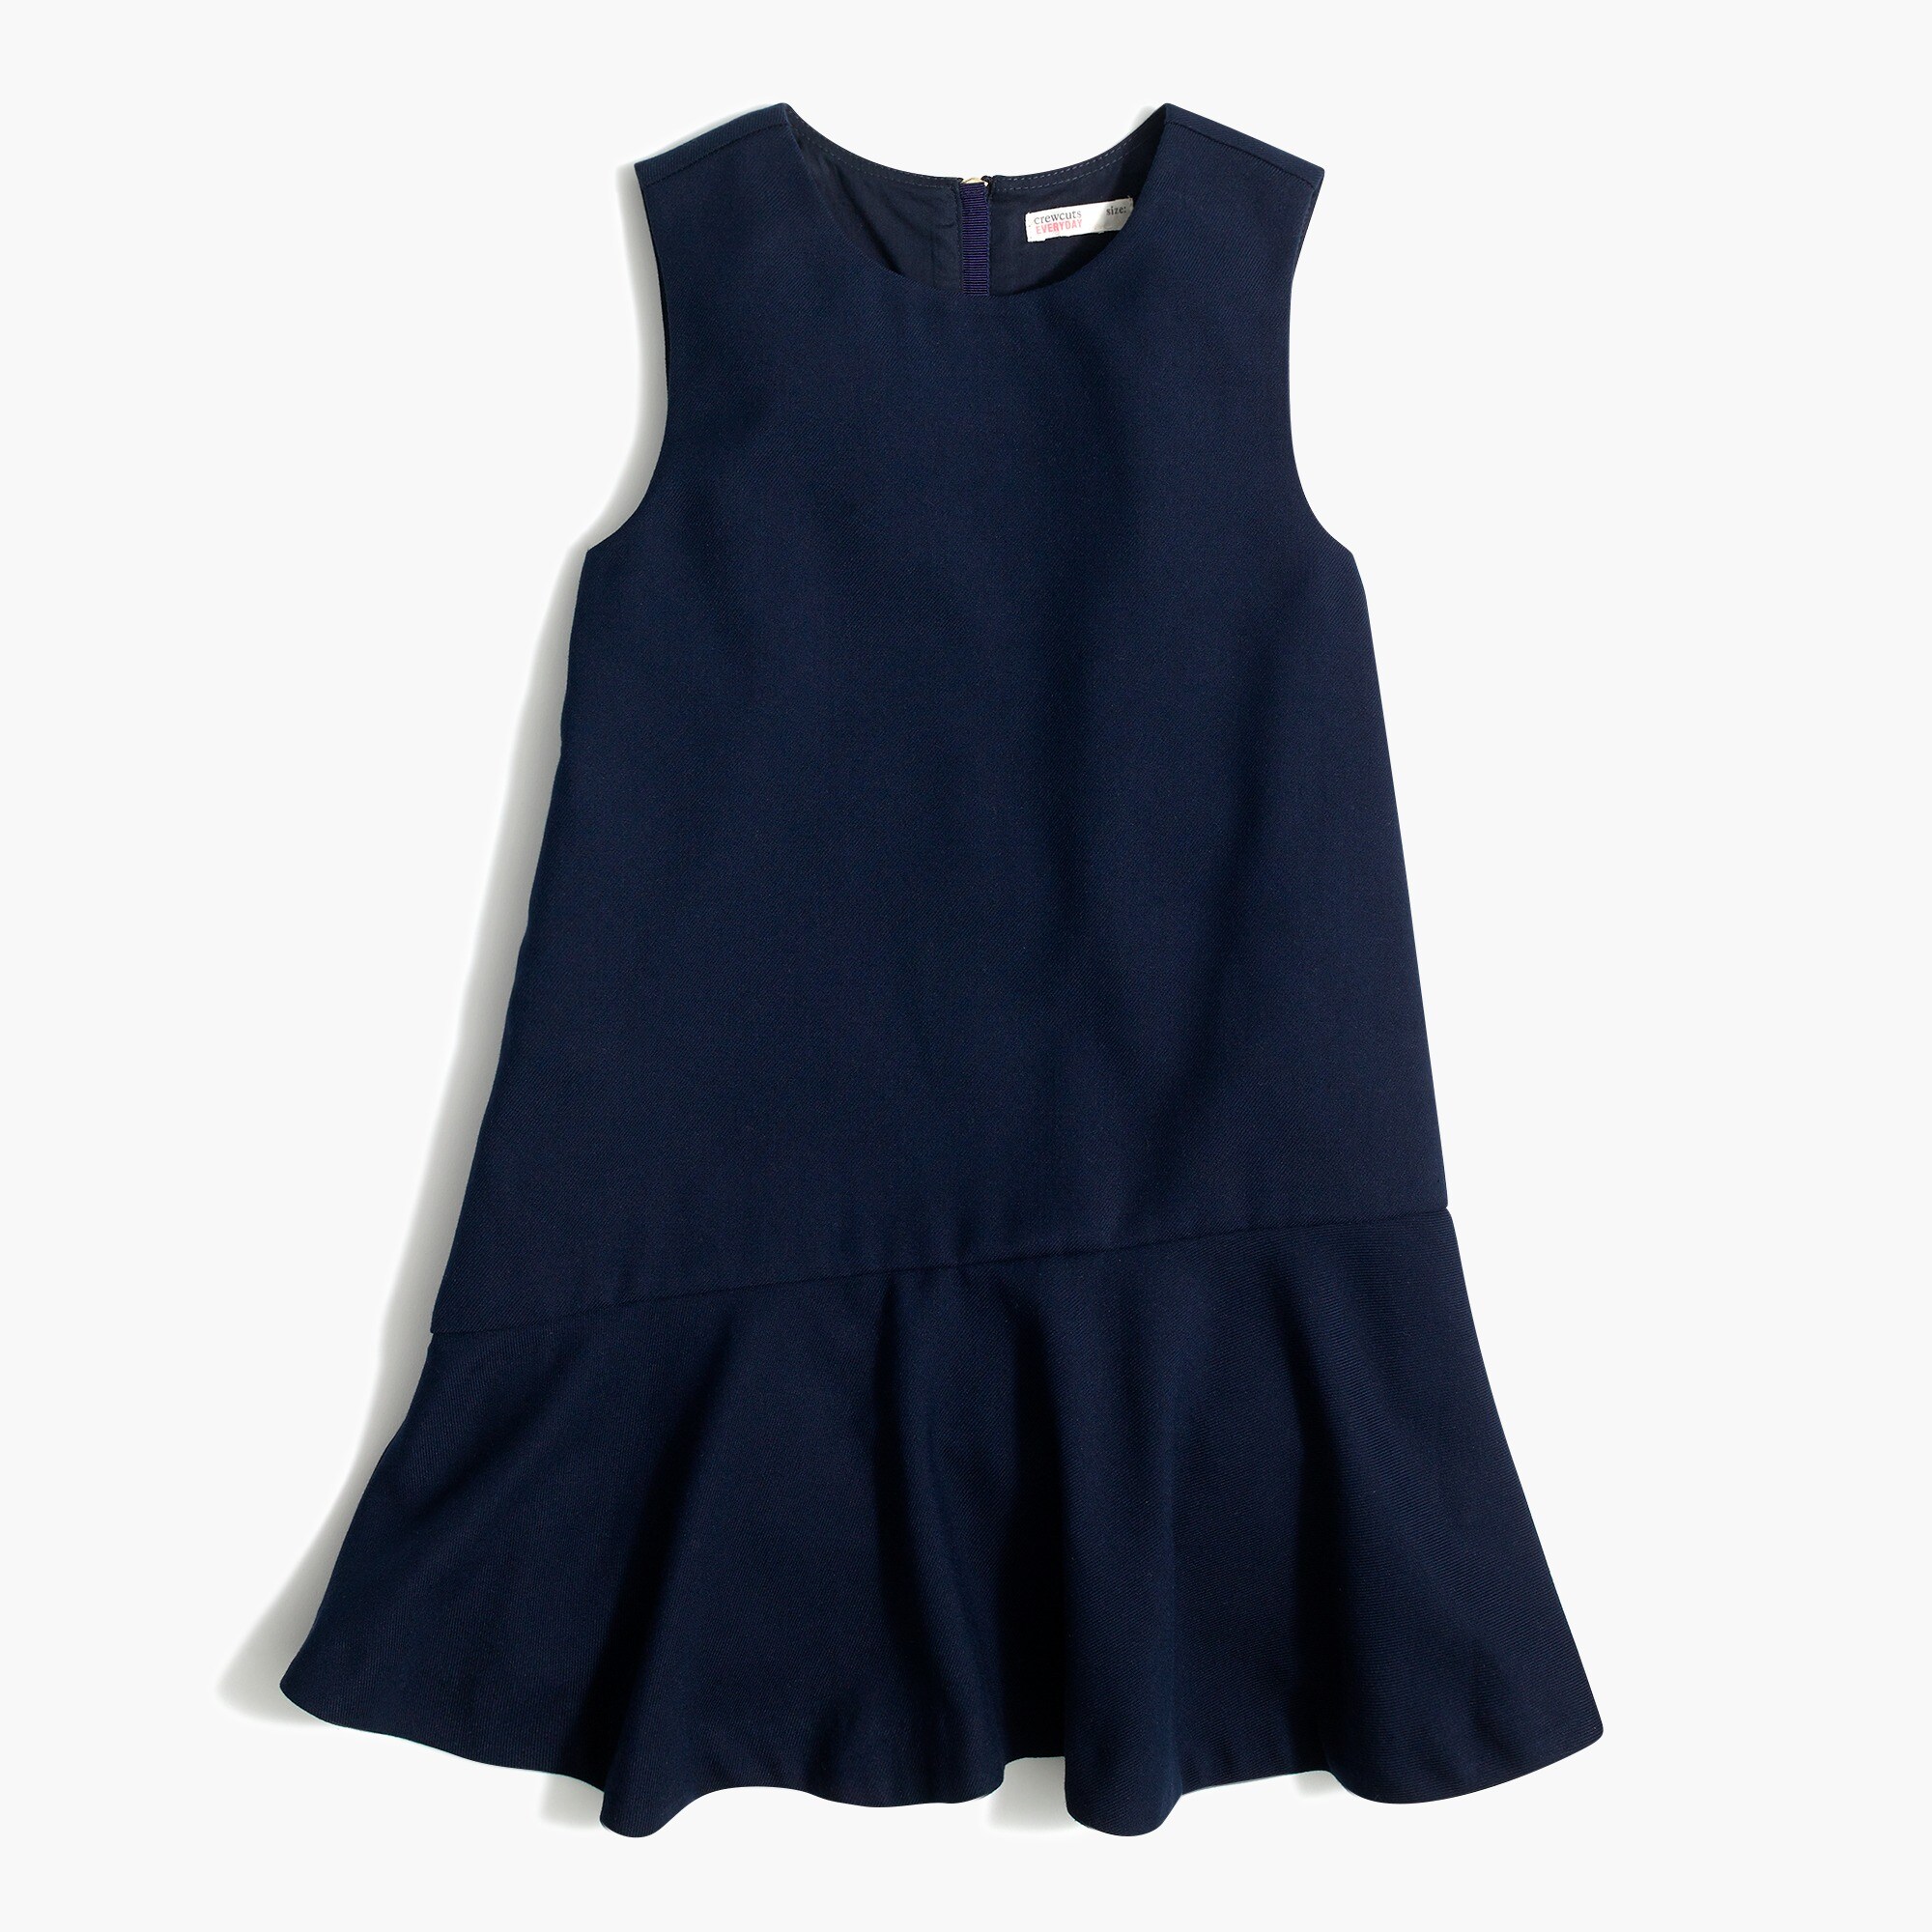 J.Crew Factory: Girls' Uniform Dress